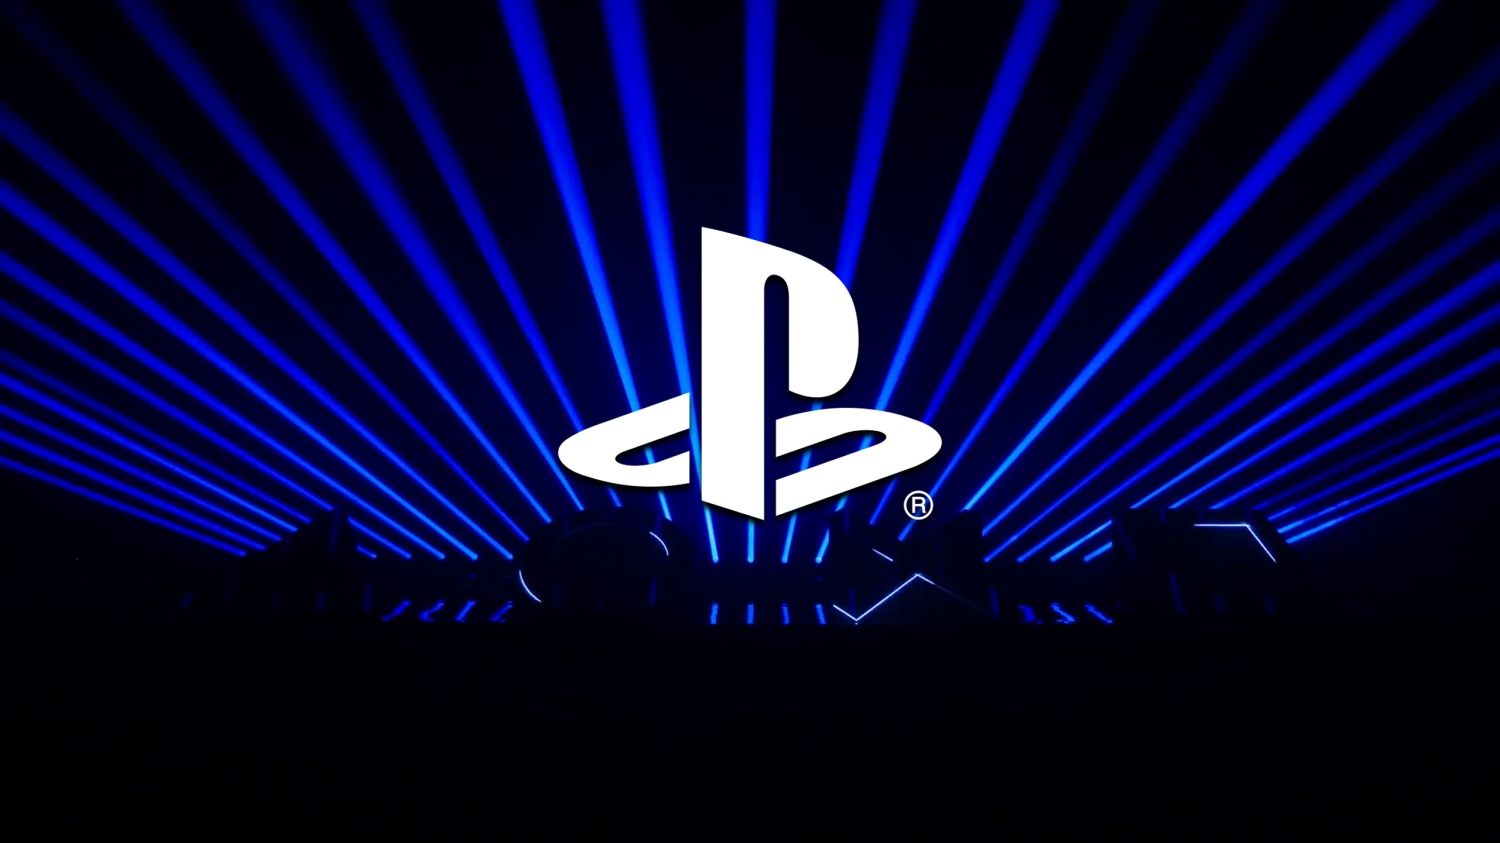 Sony drastically raises PlayStation Plus prices